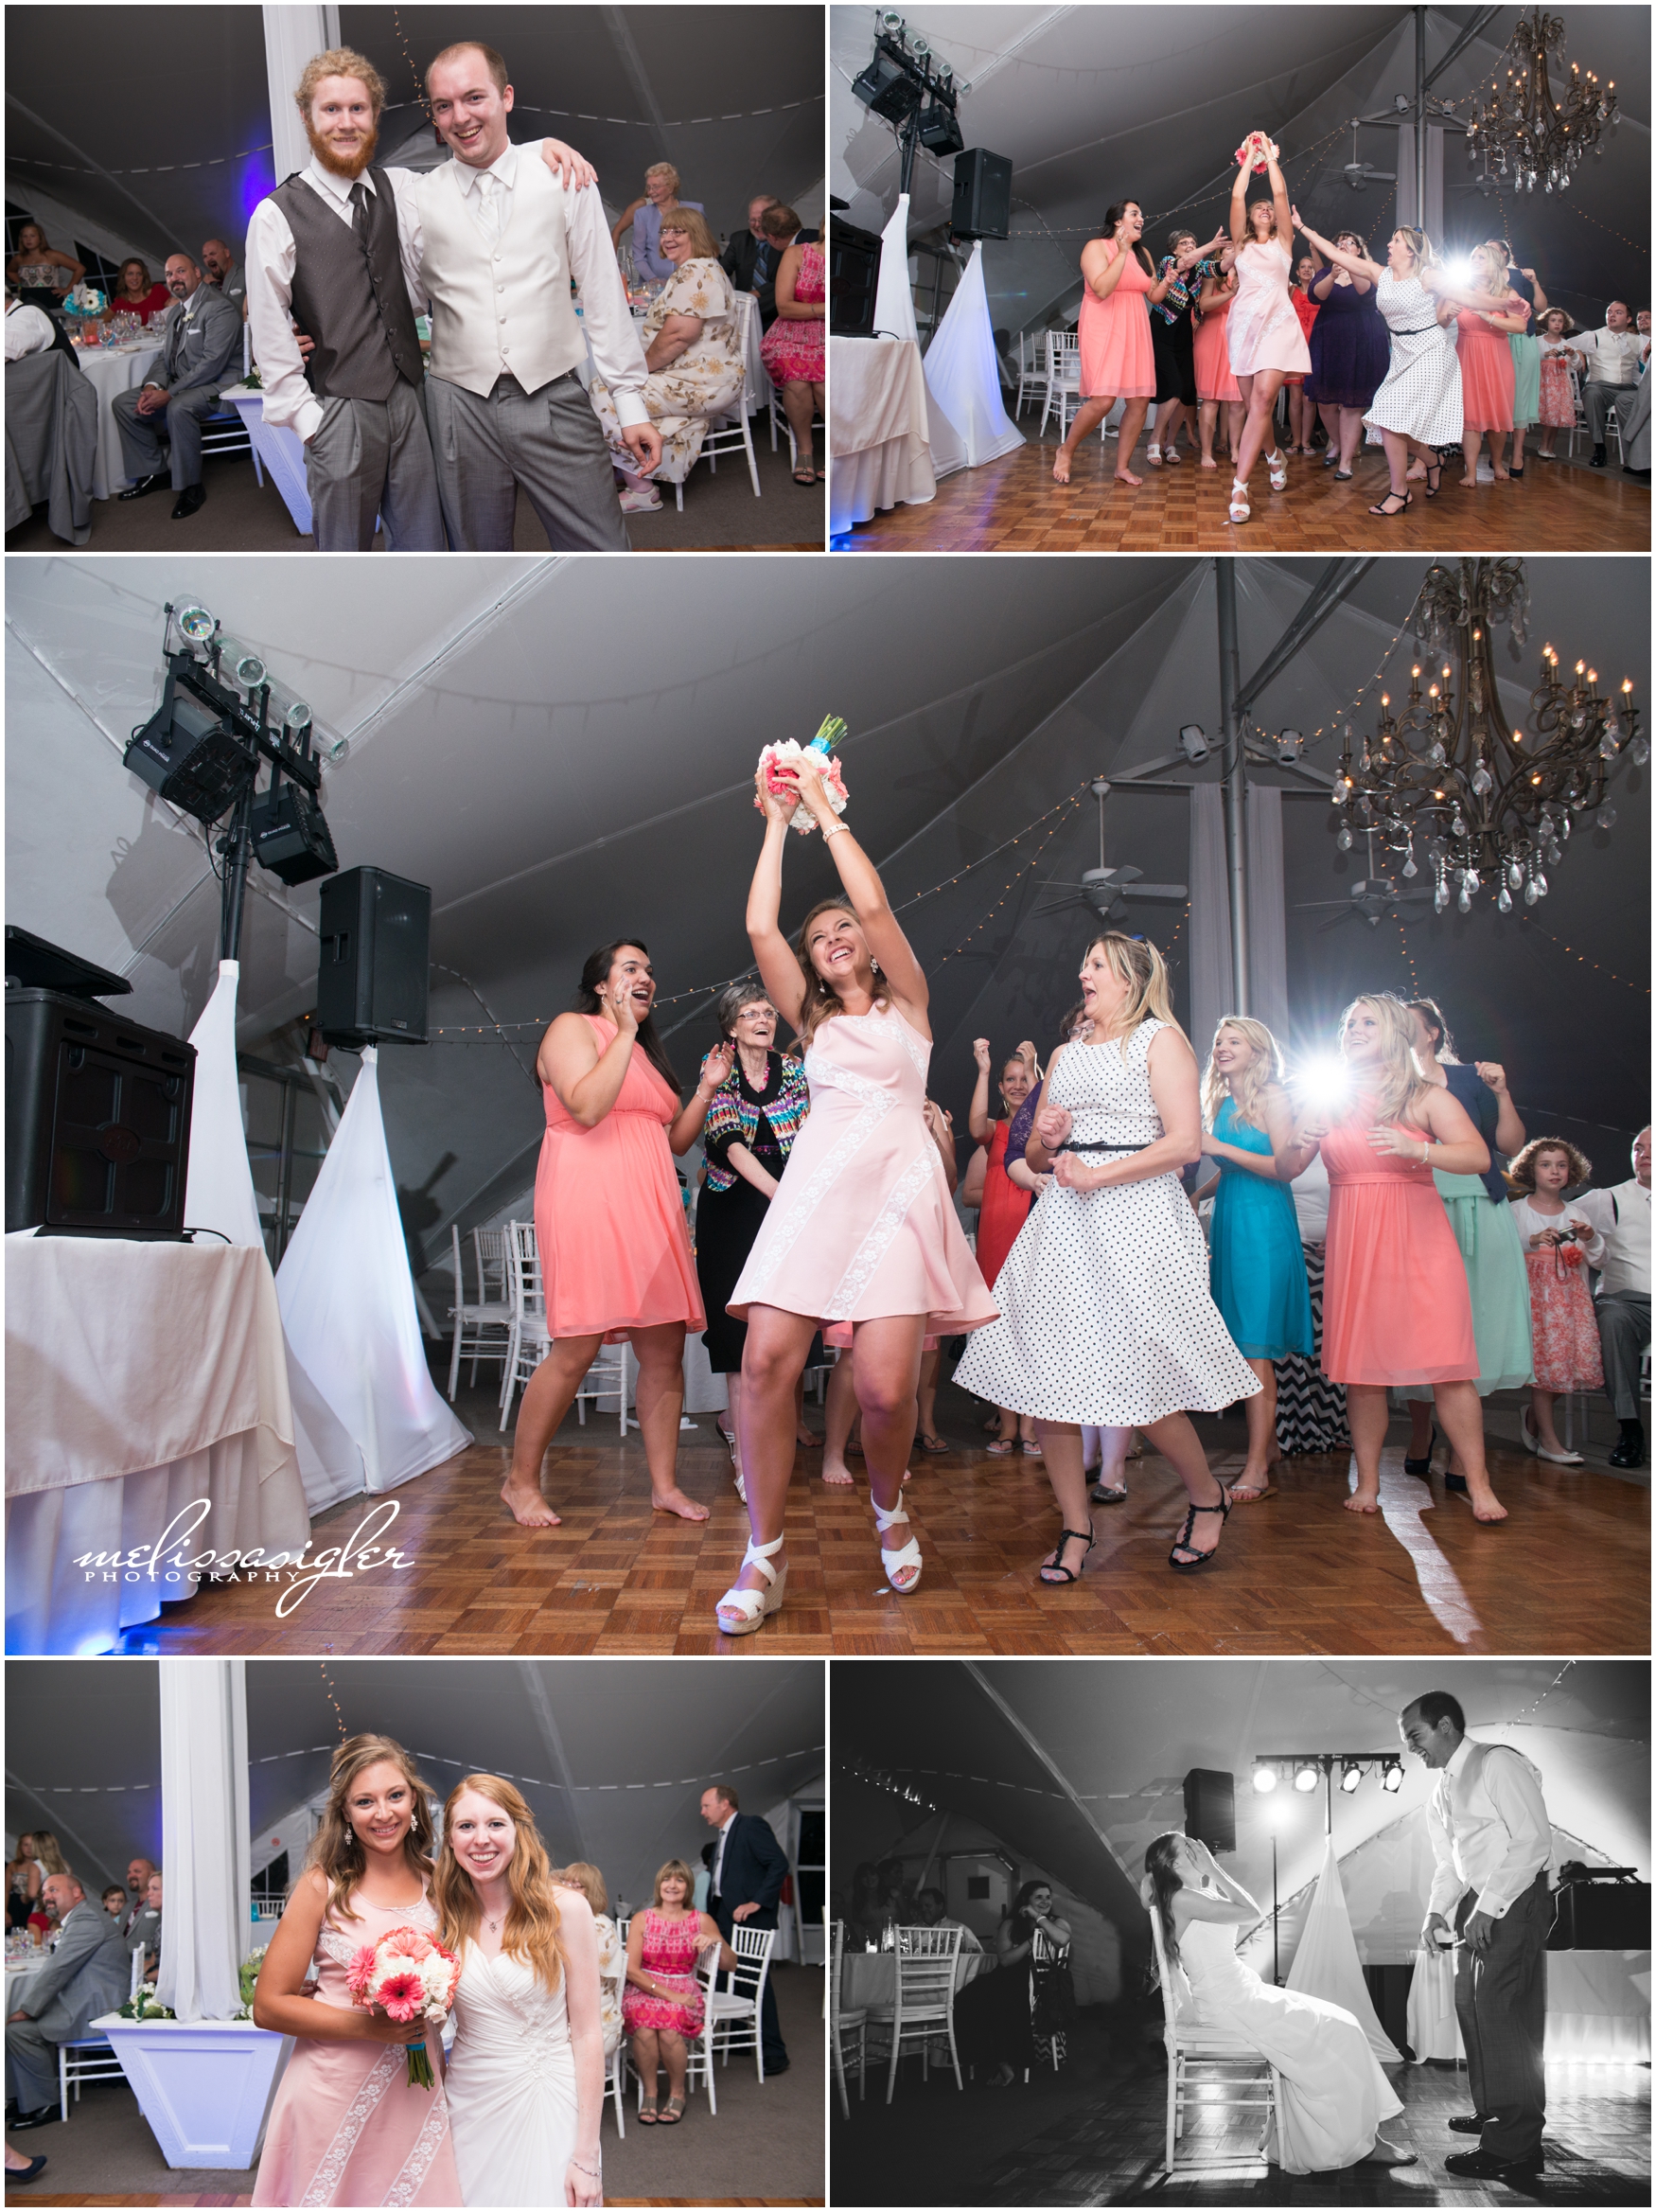 Longview Mansion wedding reception by Melissa Sigler Photography